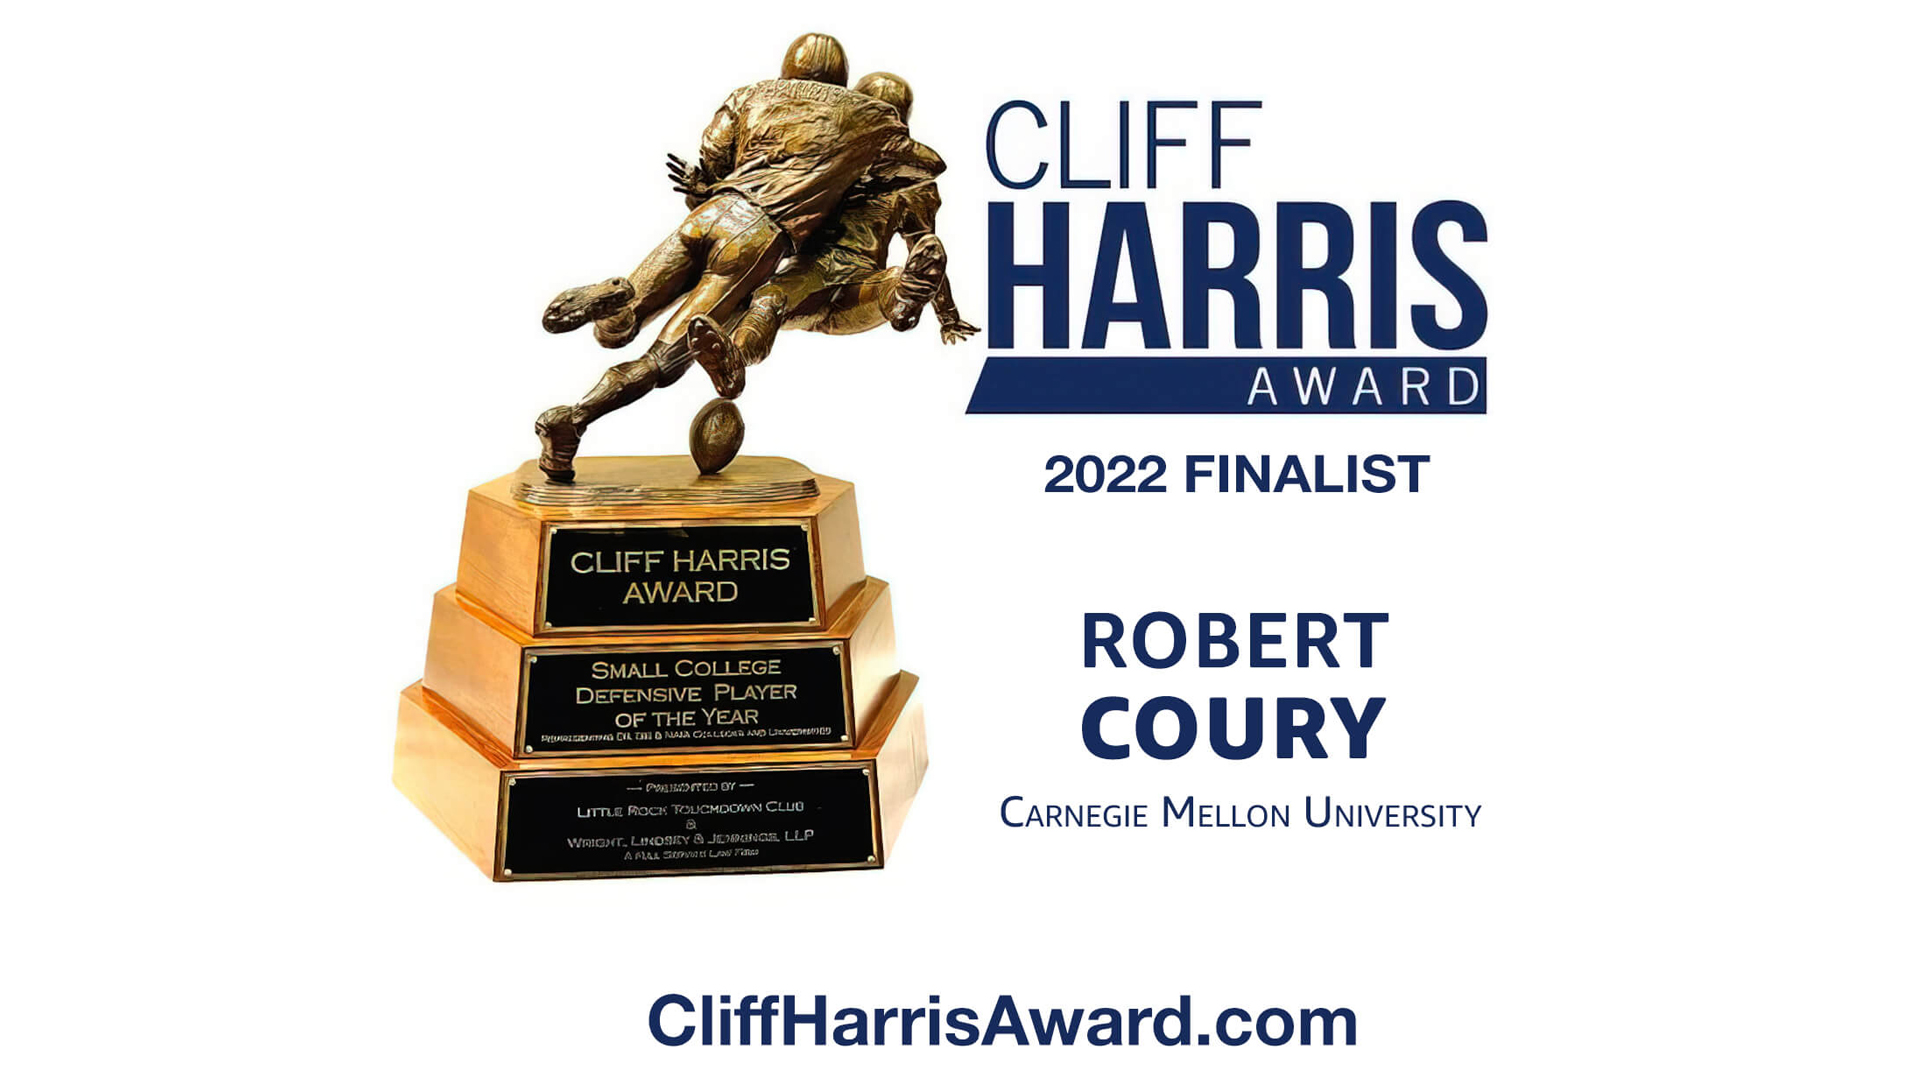 Robert Coury Named 2022 Cliff Harris Award Finalist